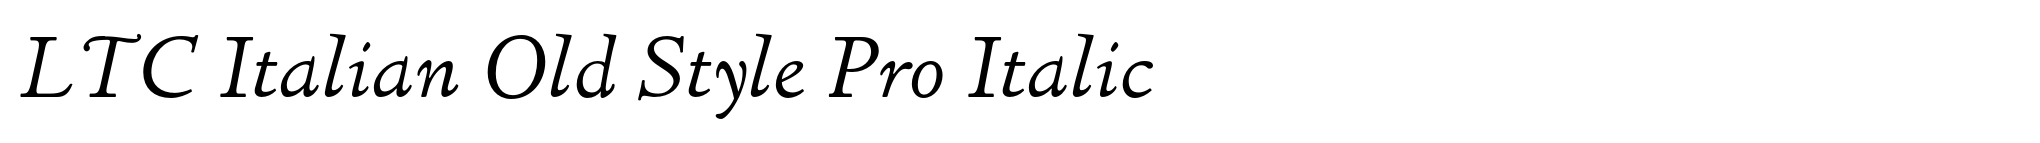 LTC Italian Old Style Pro Italic image